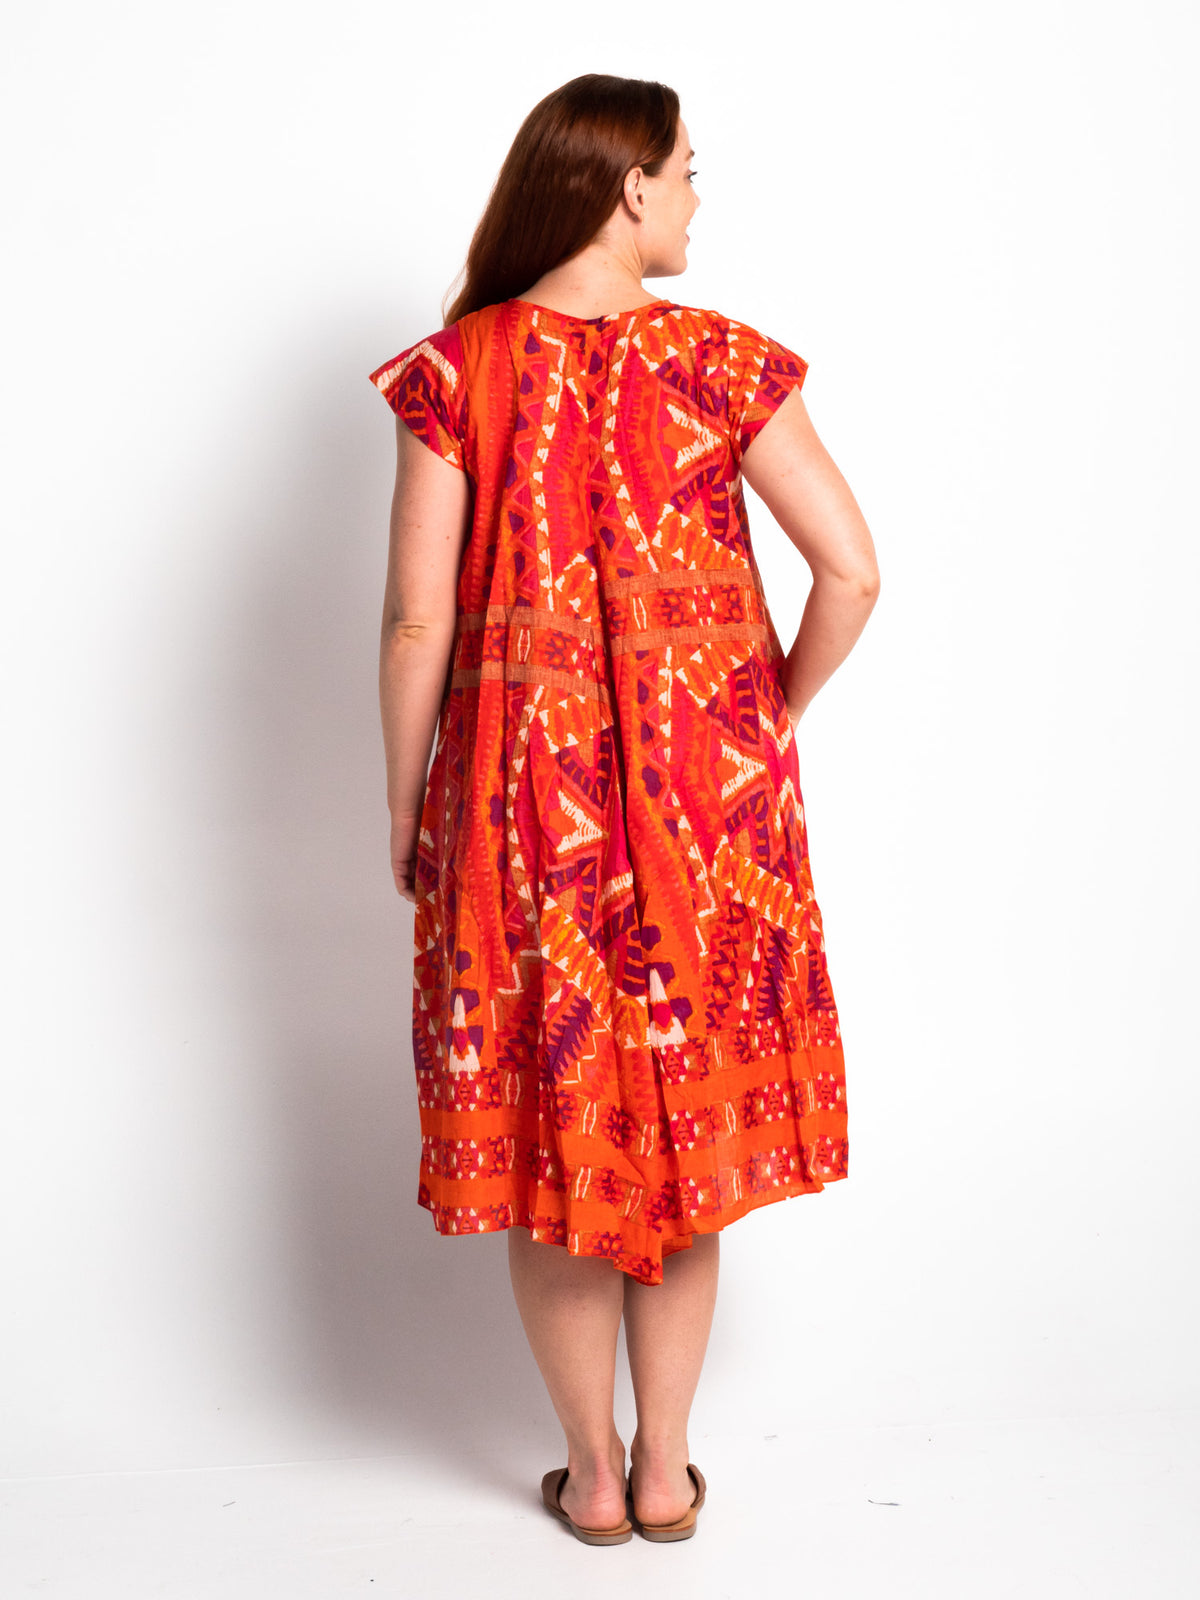 Maheno Dress in Blood Orange